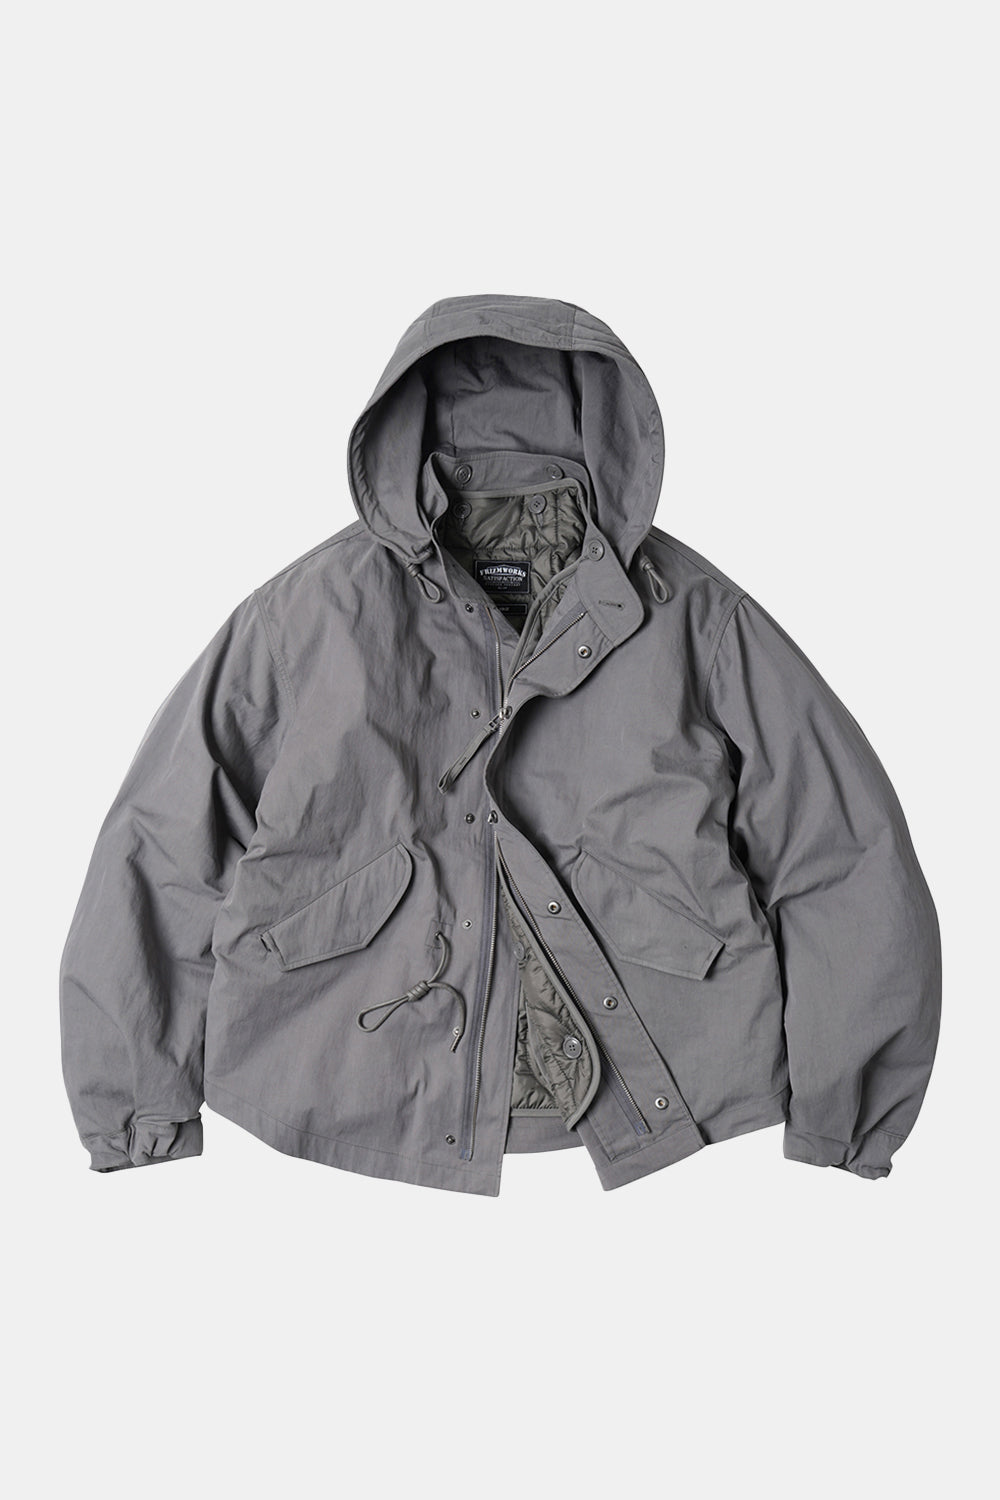 Frizmworks Oscar Fishtail Jacket (Grey)